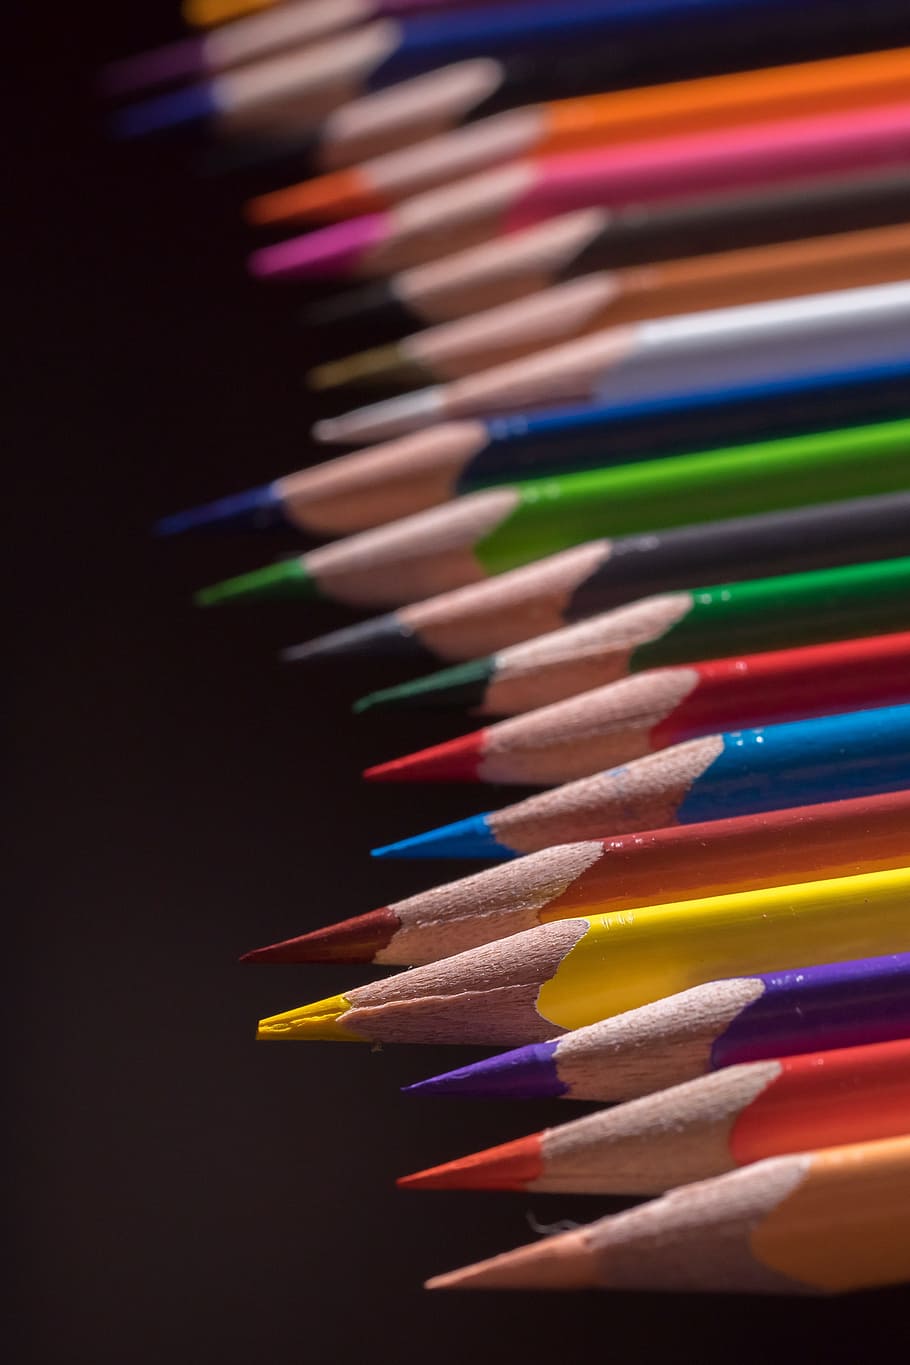 lápices de colores, clavijas de madera, bolígrafos, coloridos, color, pintura, escuela, dibujar, puntiagudos, cerrar